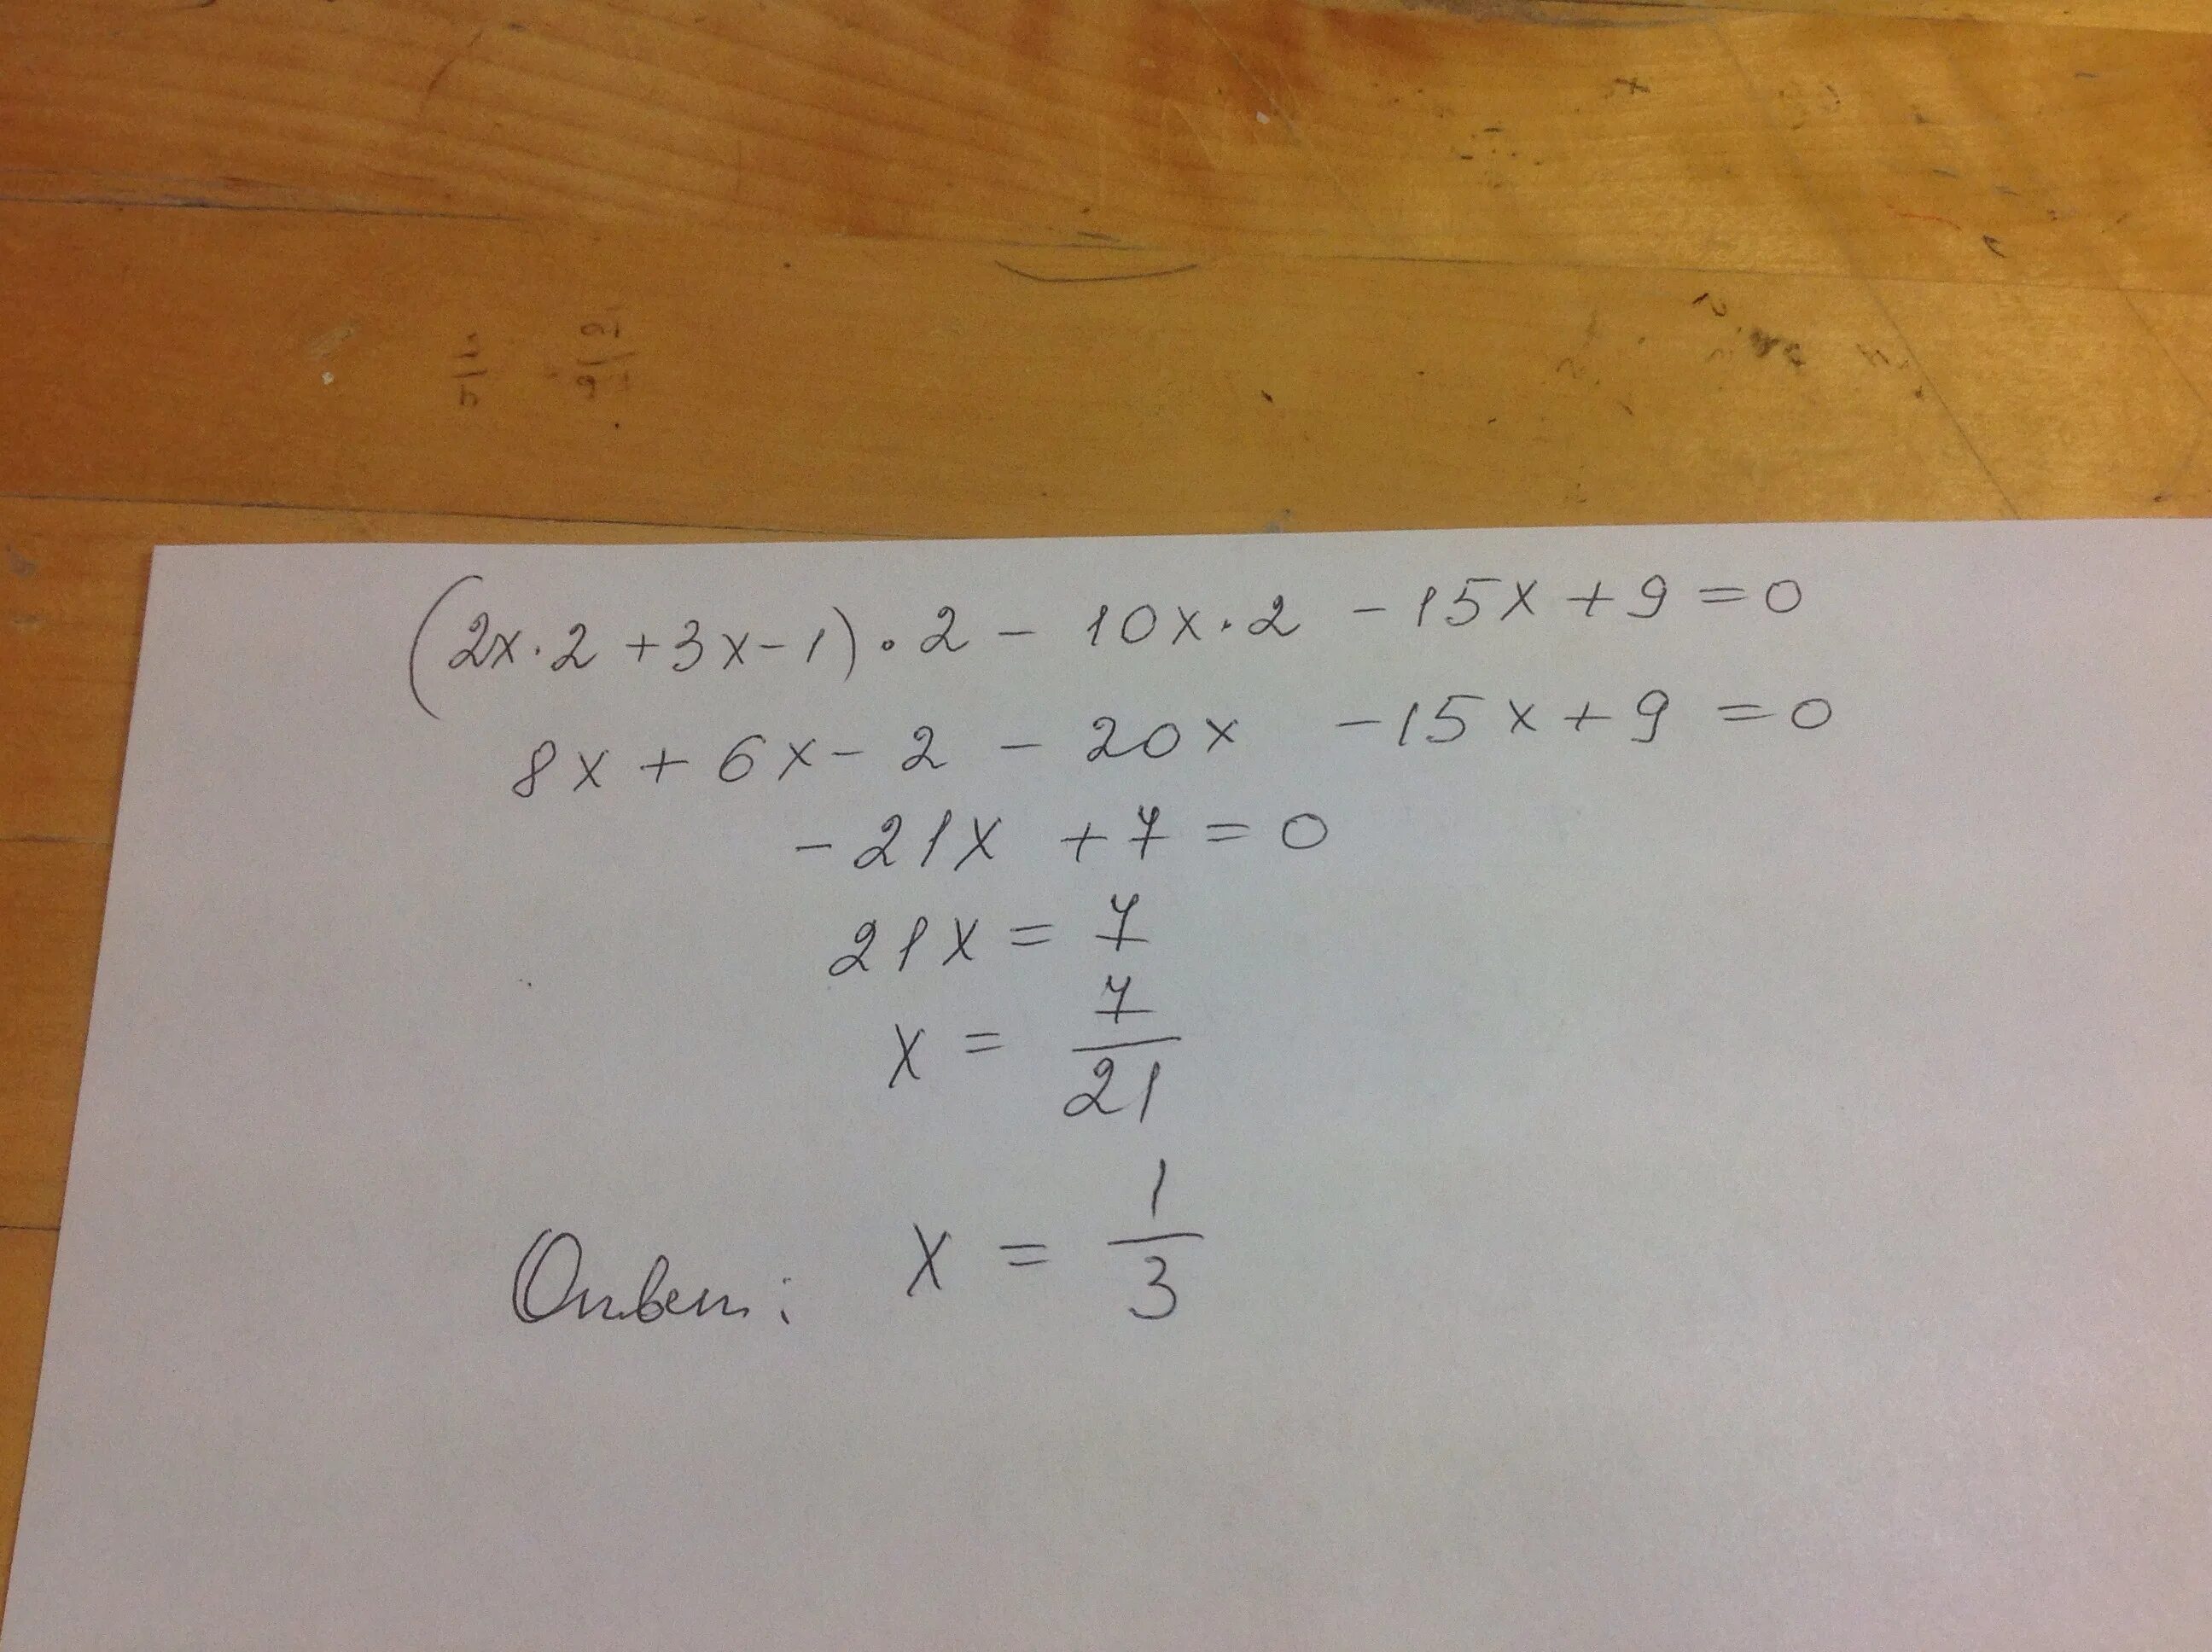 Решение уравнения 3x 9 2x. X3+2x2+2x+1. 10x 15 уравнение решении. 1/2x2-10. (X - 15) + (3x - 7) = 2(x−15)+(3x−7)=2.